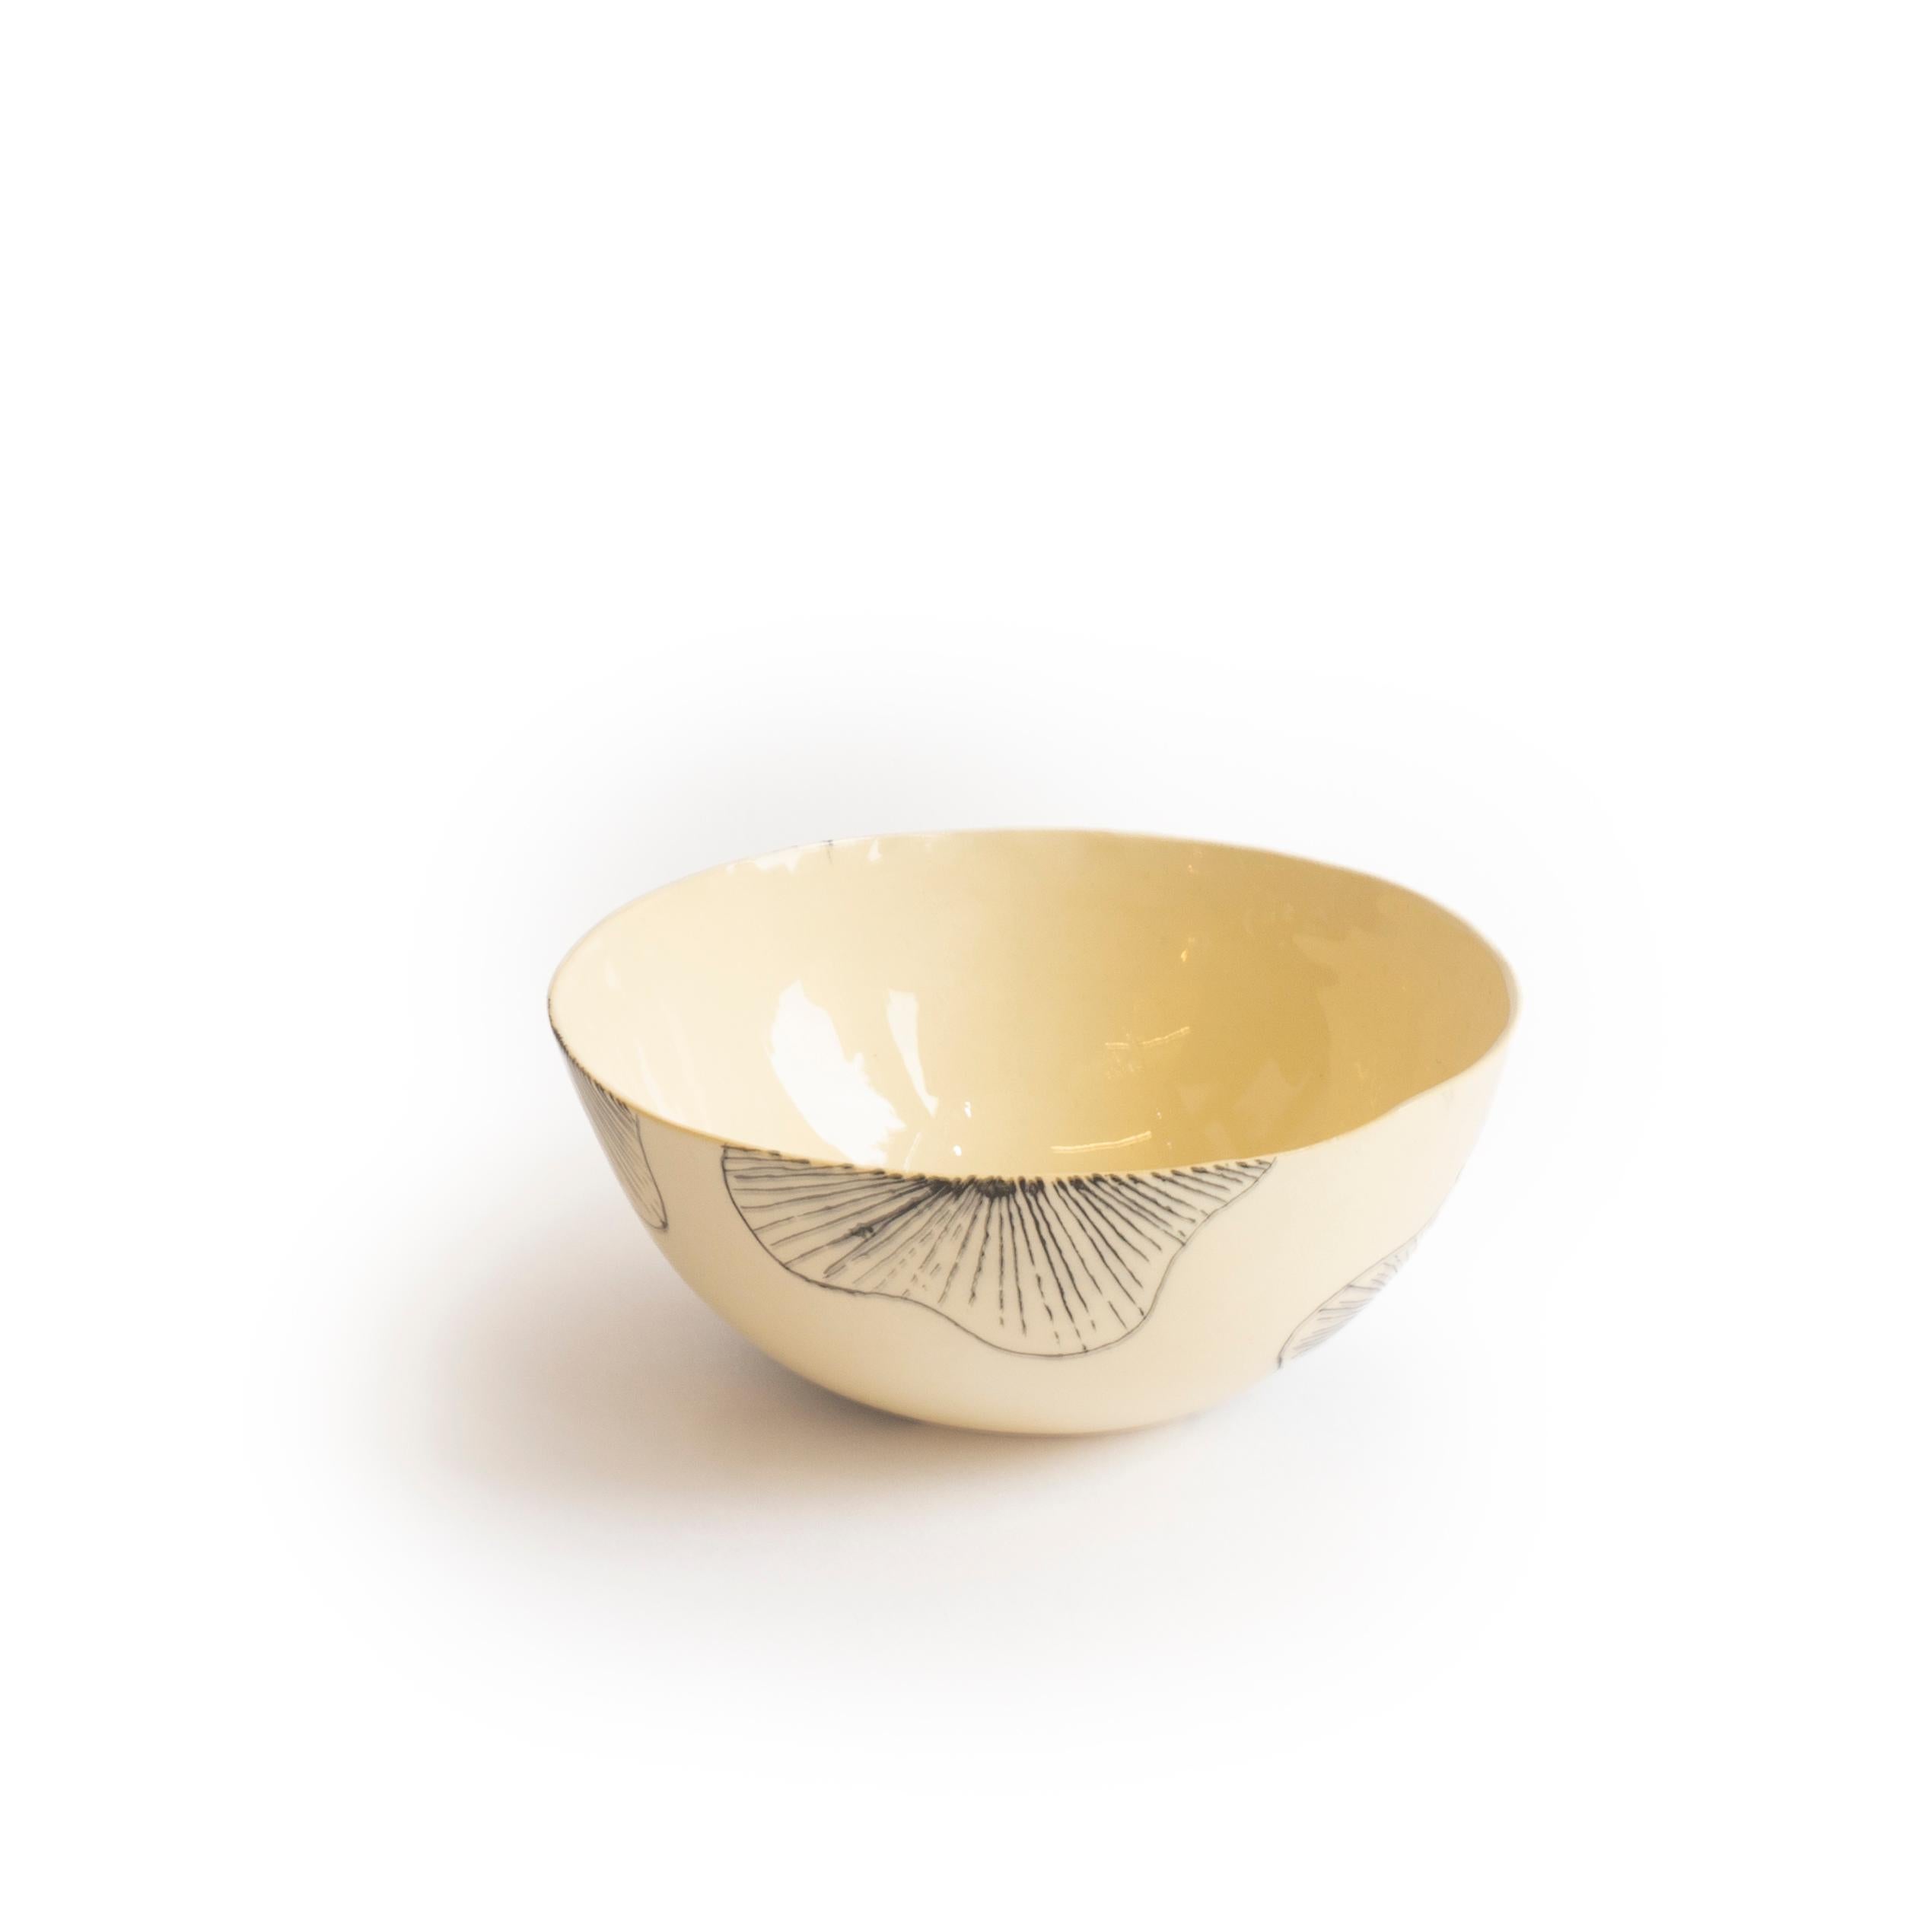 Organic Modern Small Handmade Ceramic Bowls with Coral Illustration